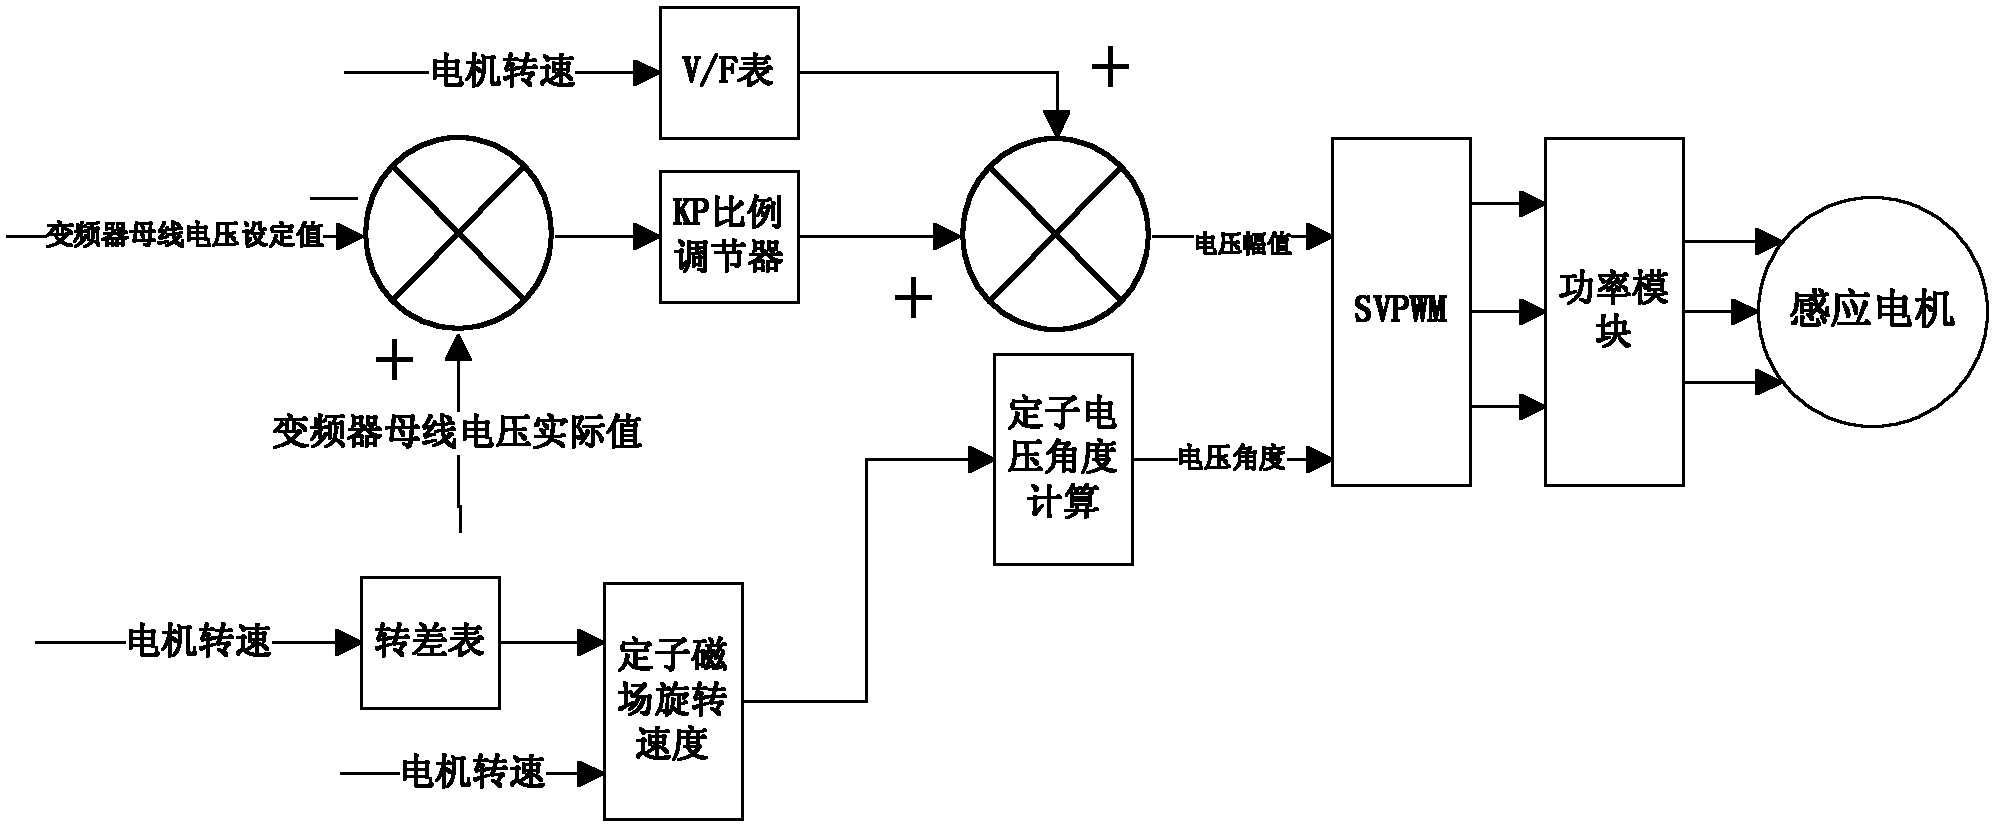 Brake control method for induction motor